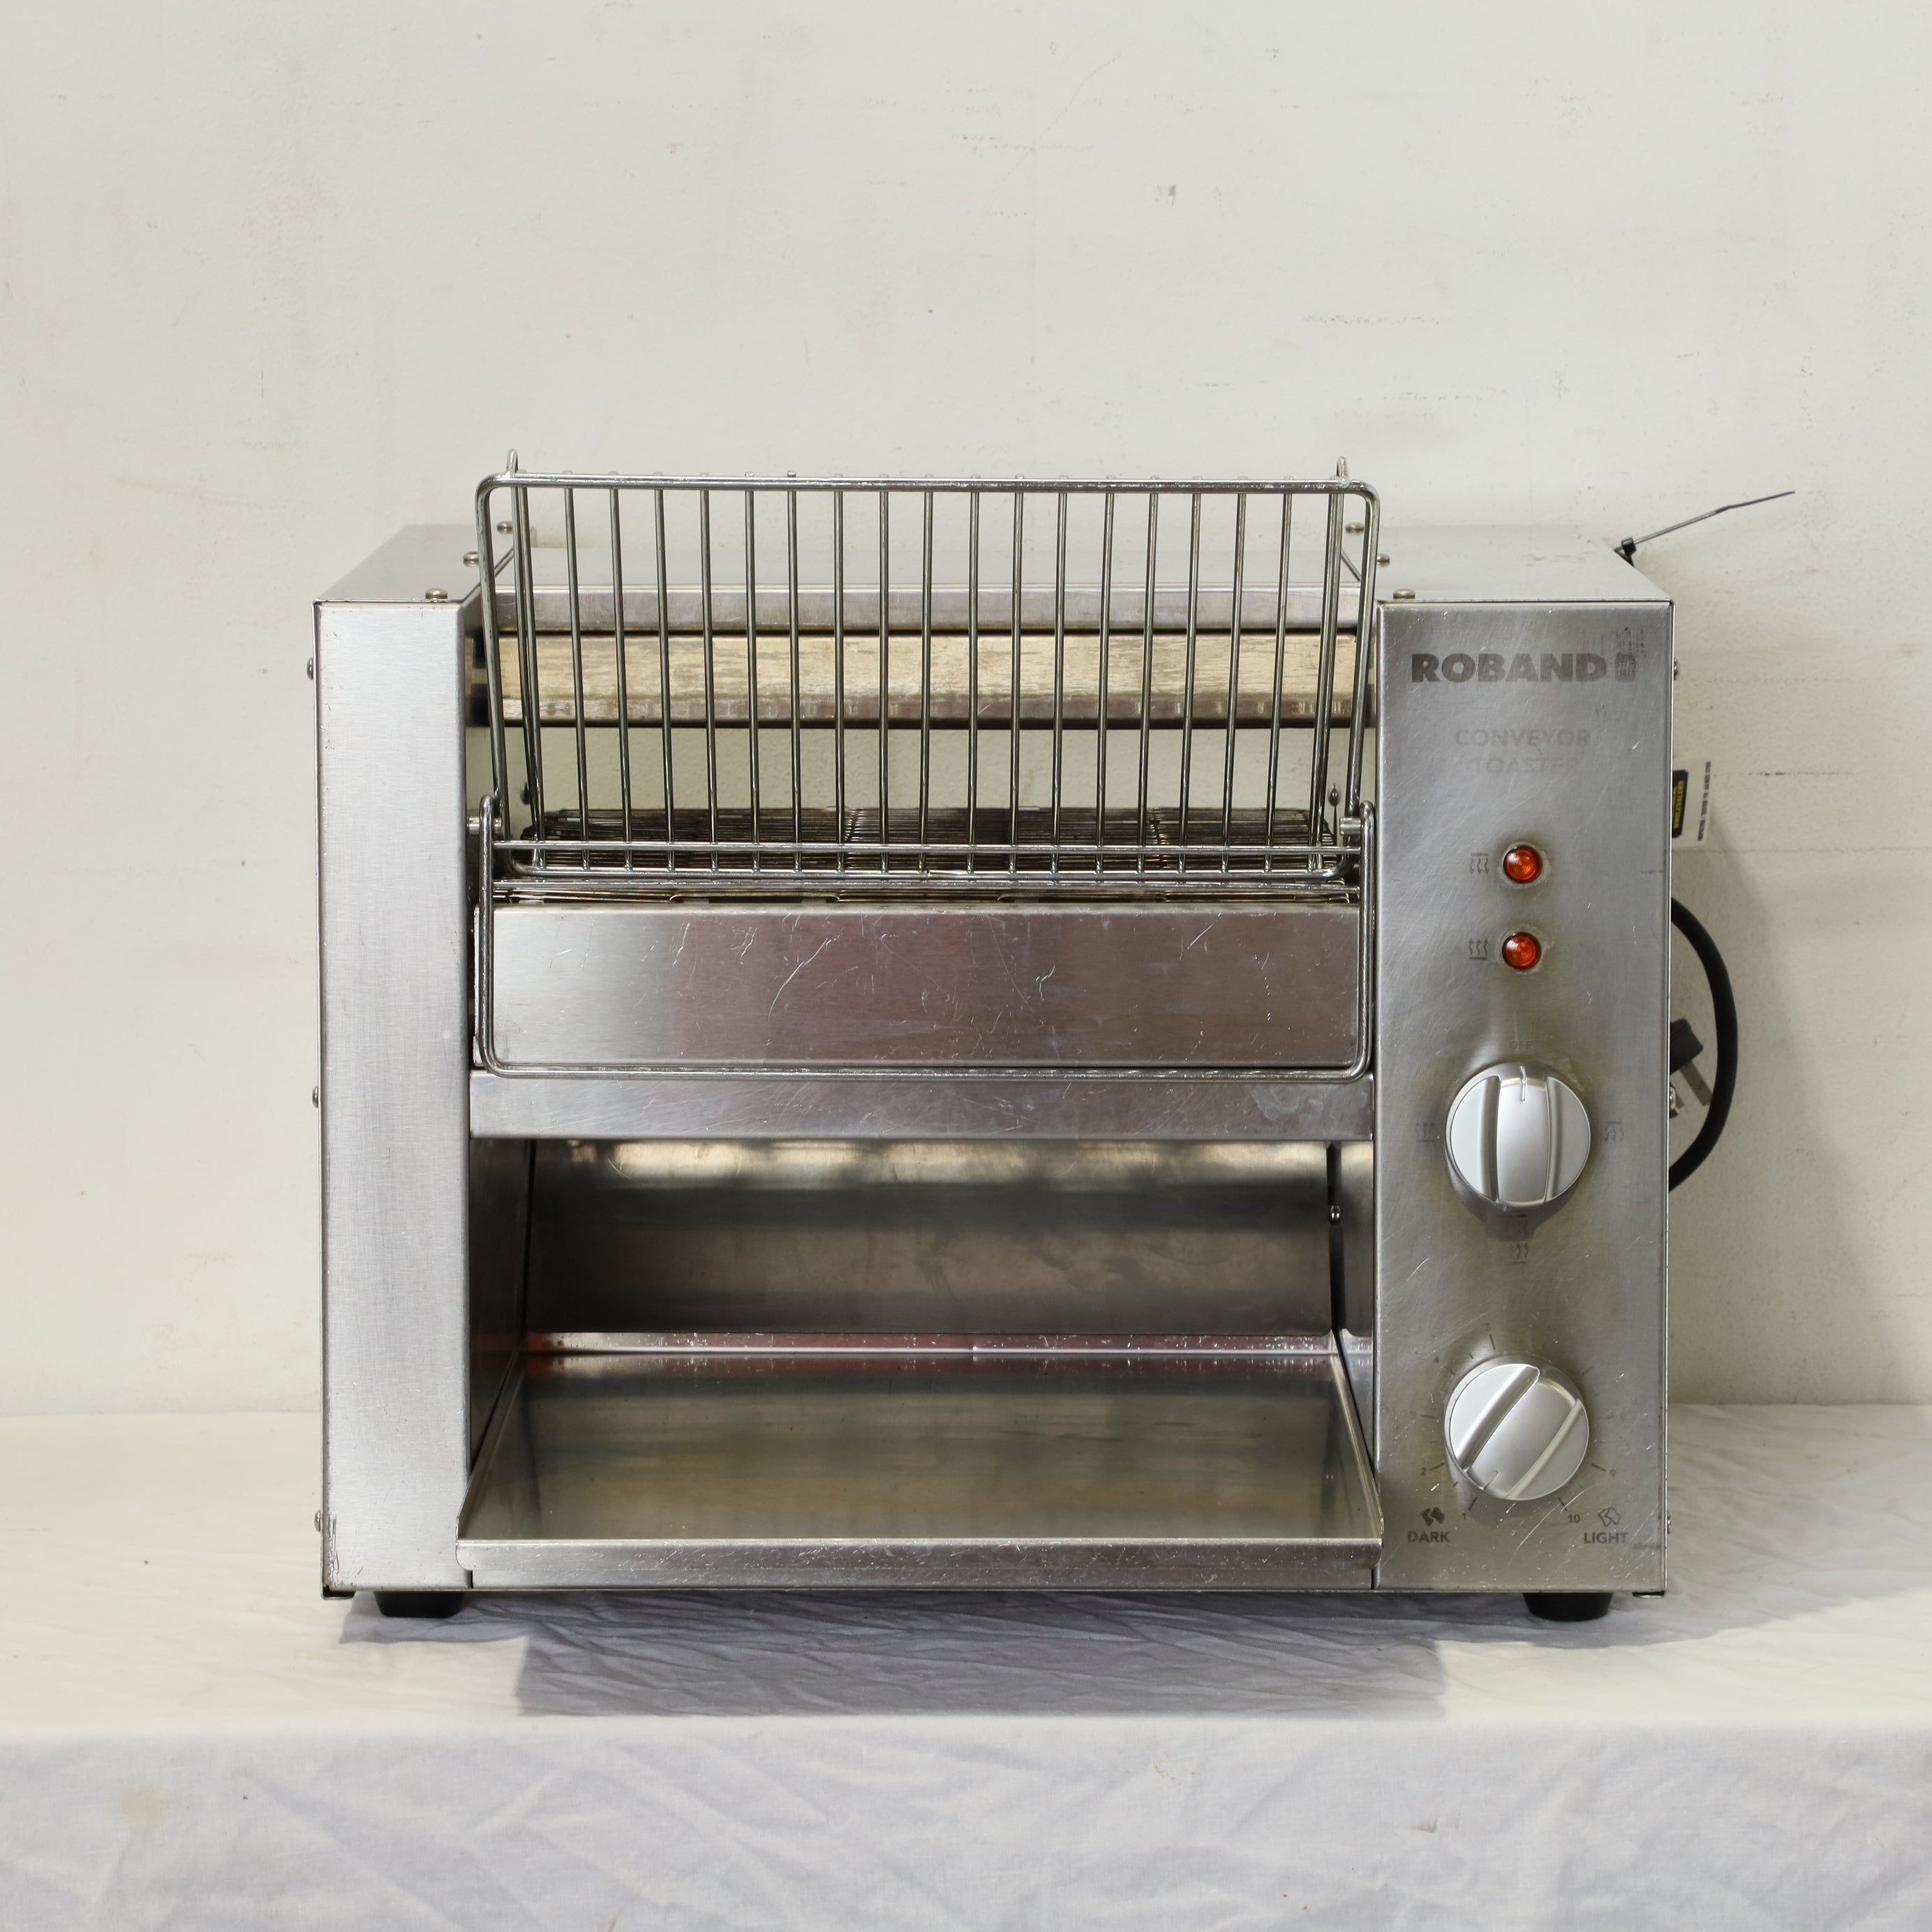 Thumbnail - Roband TCR10 Conveyor Toaster